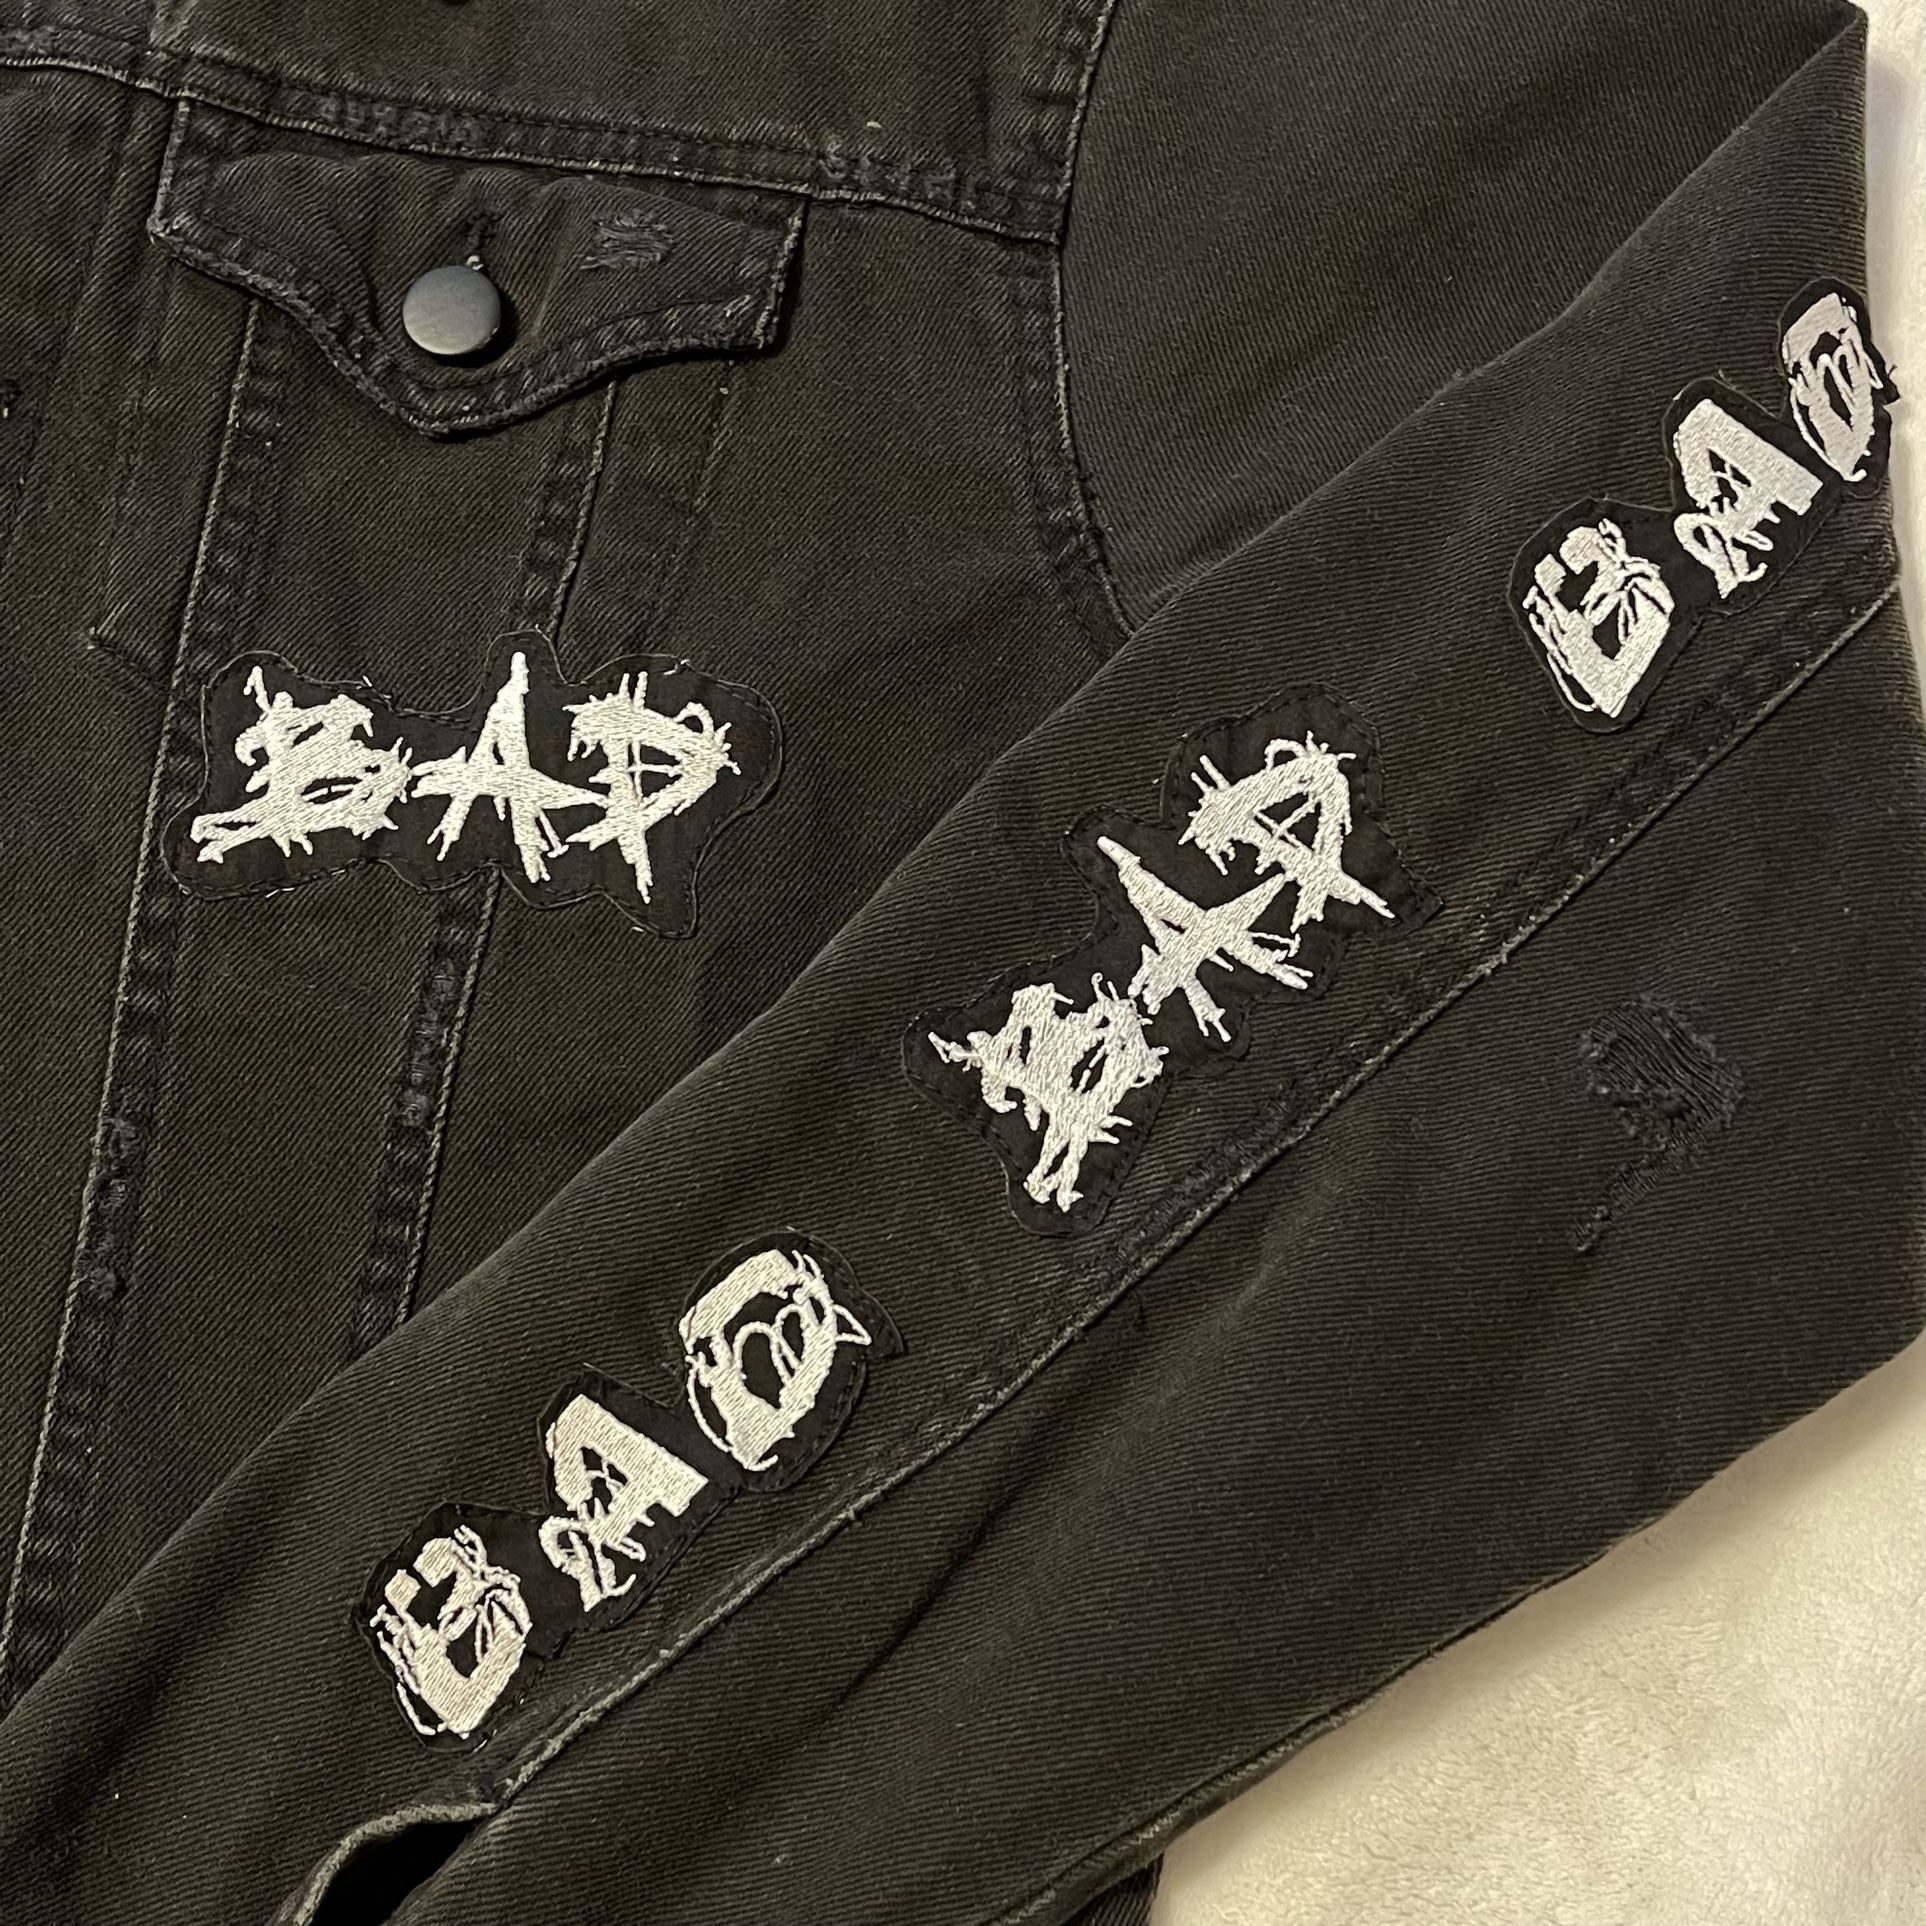 XXXTENTACION “Bad” Embroidered Distressed Denim Jacket